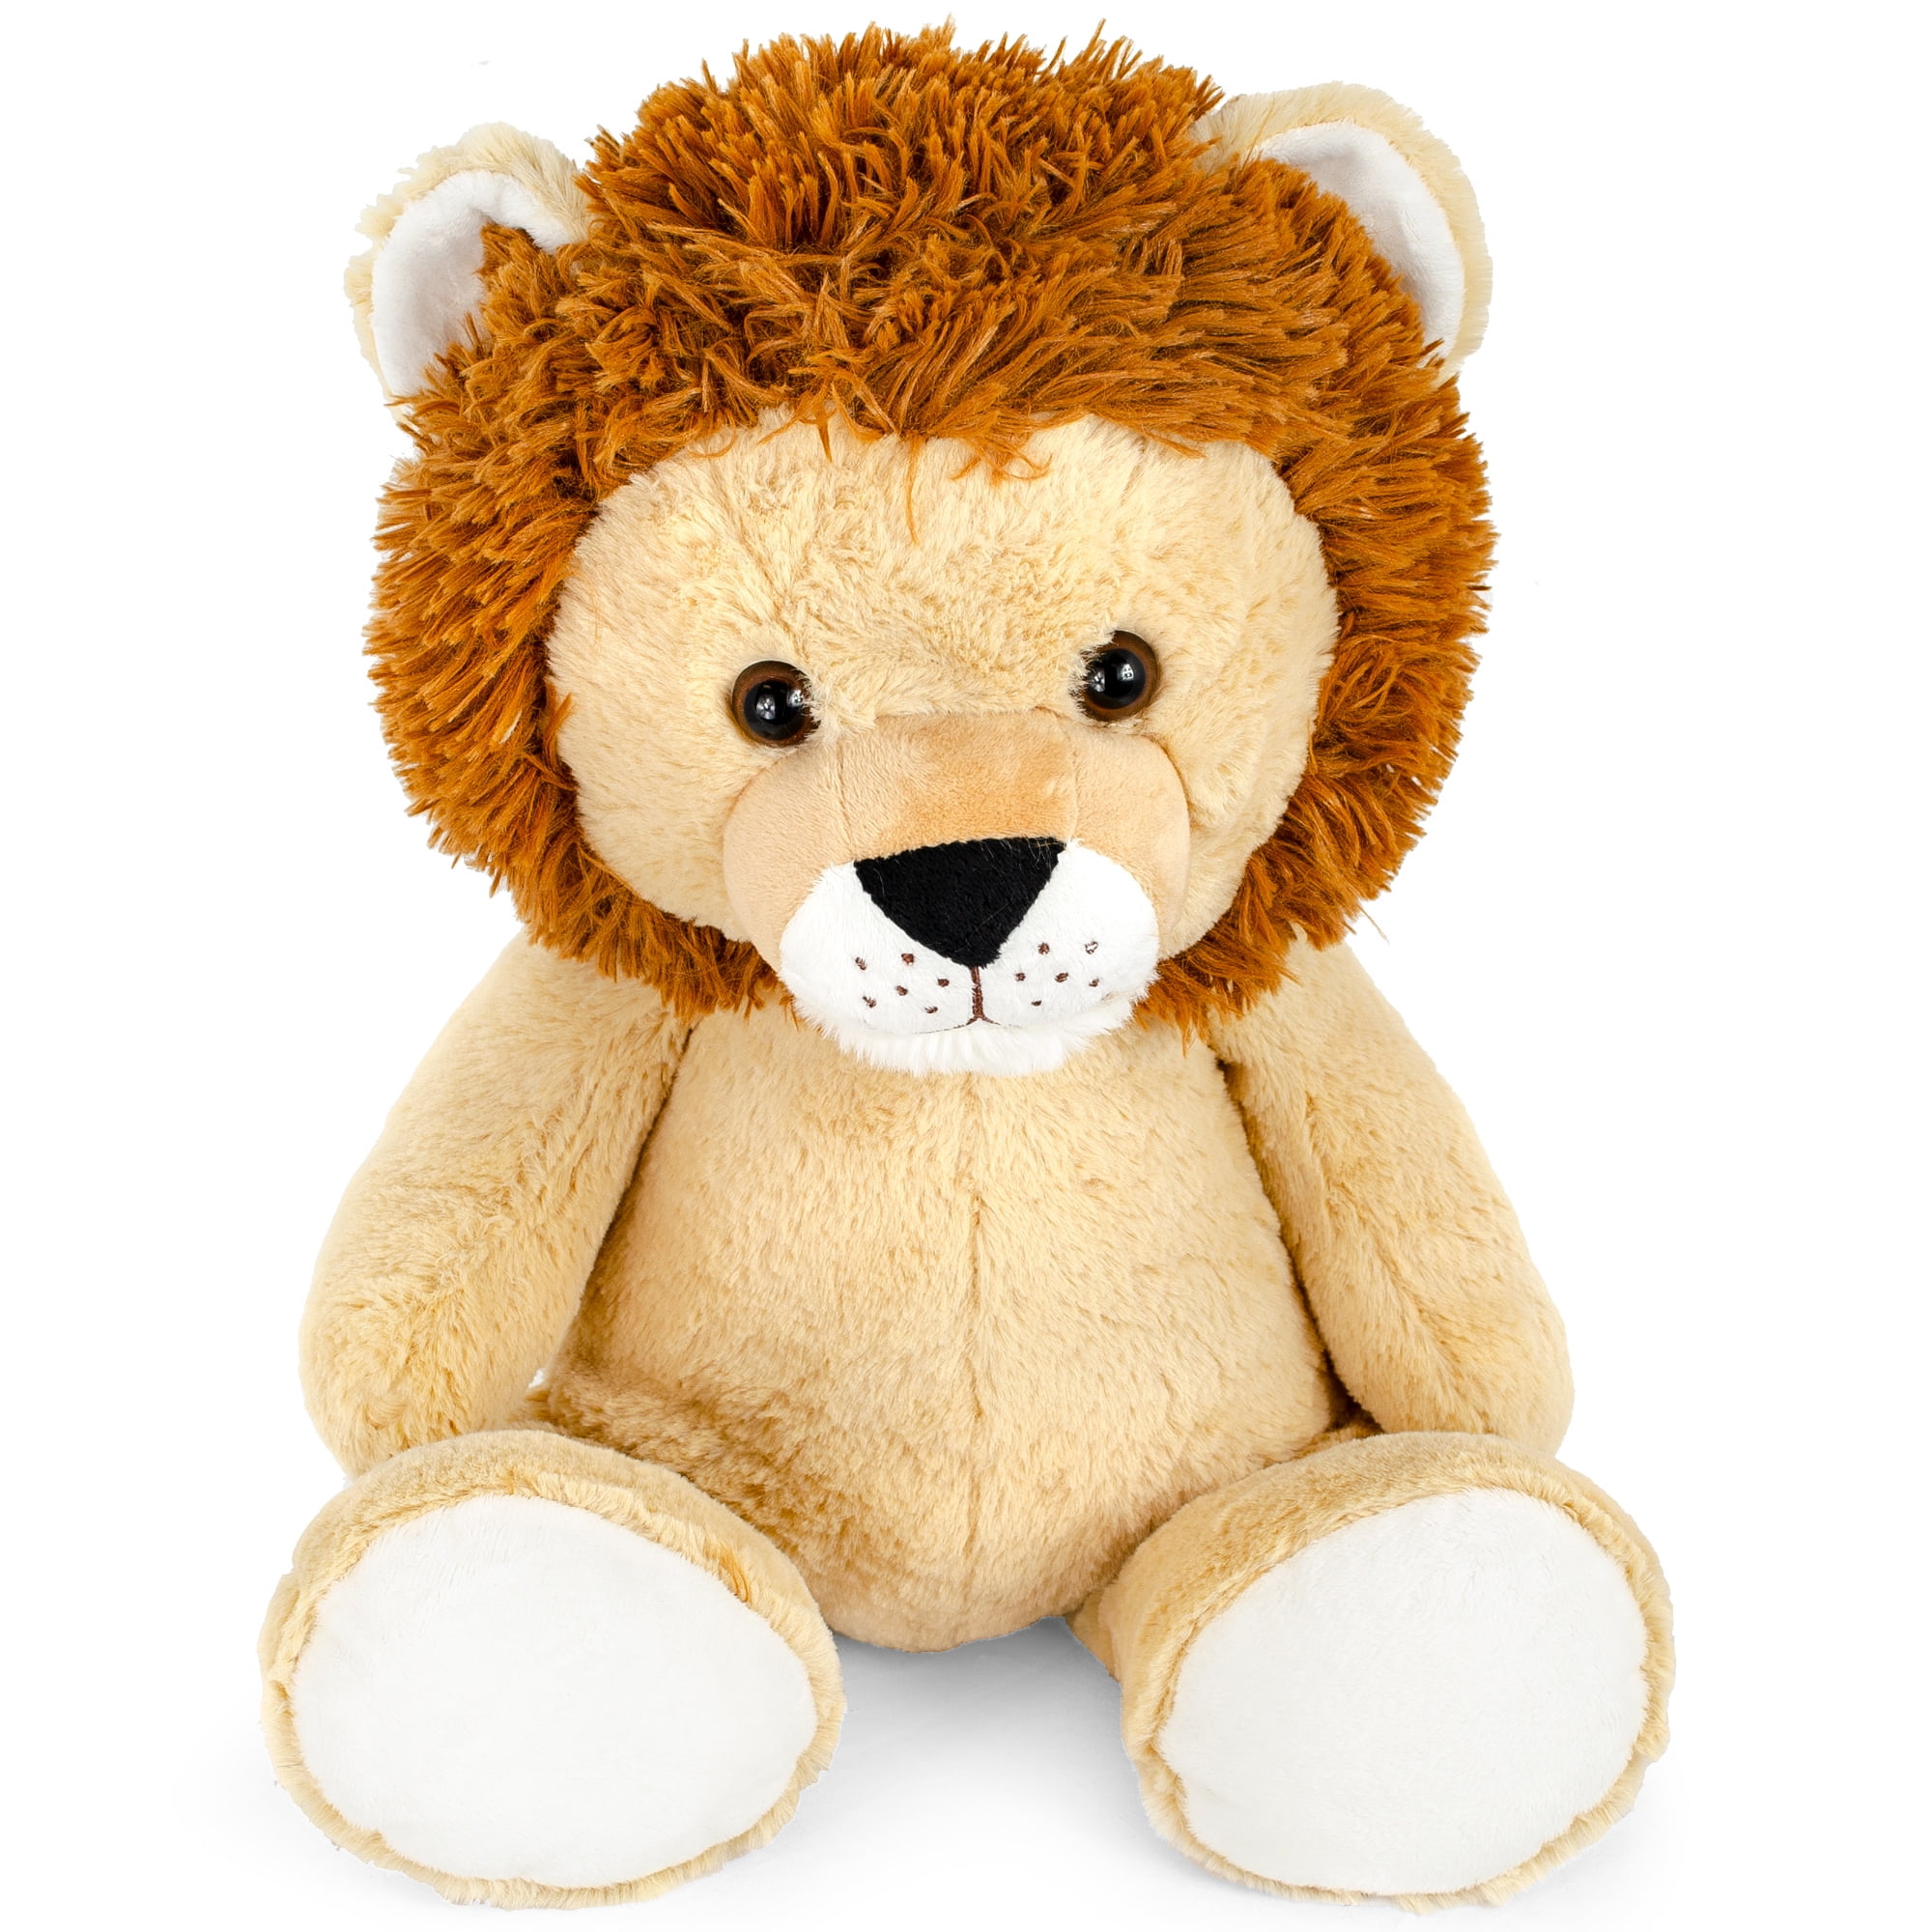 Lion Plush Soft Cuddly Huge Stuffed Animal Big Jungle Gift Kids Toy Teddy Brown